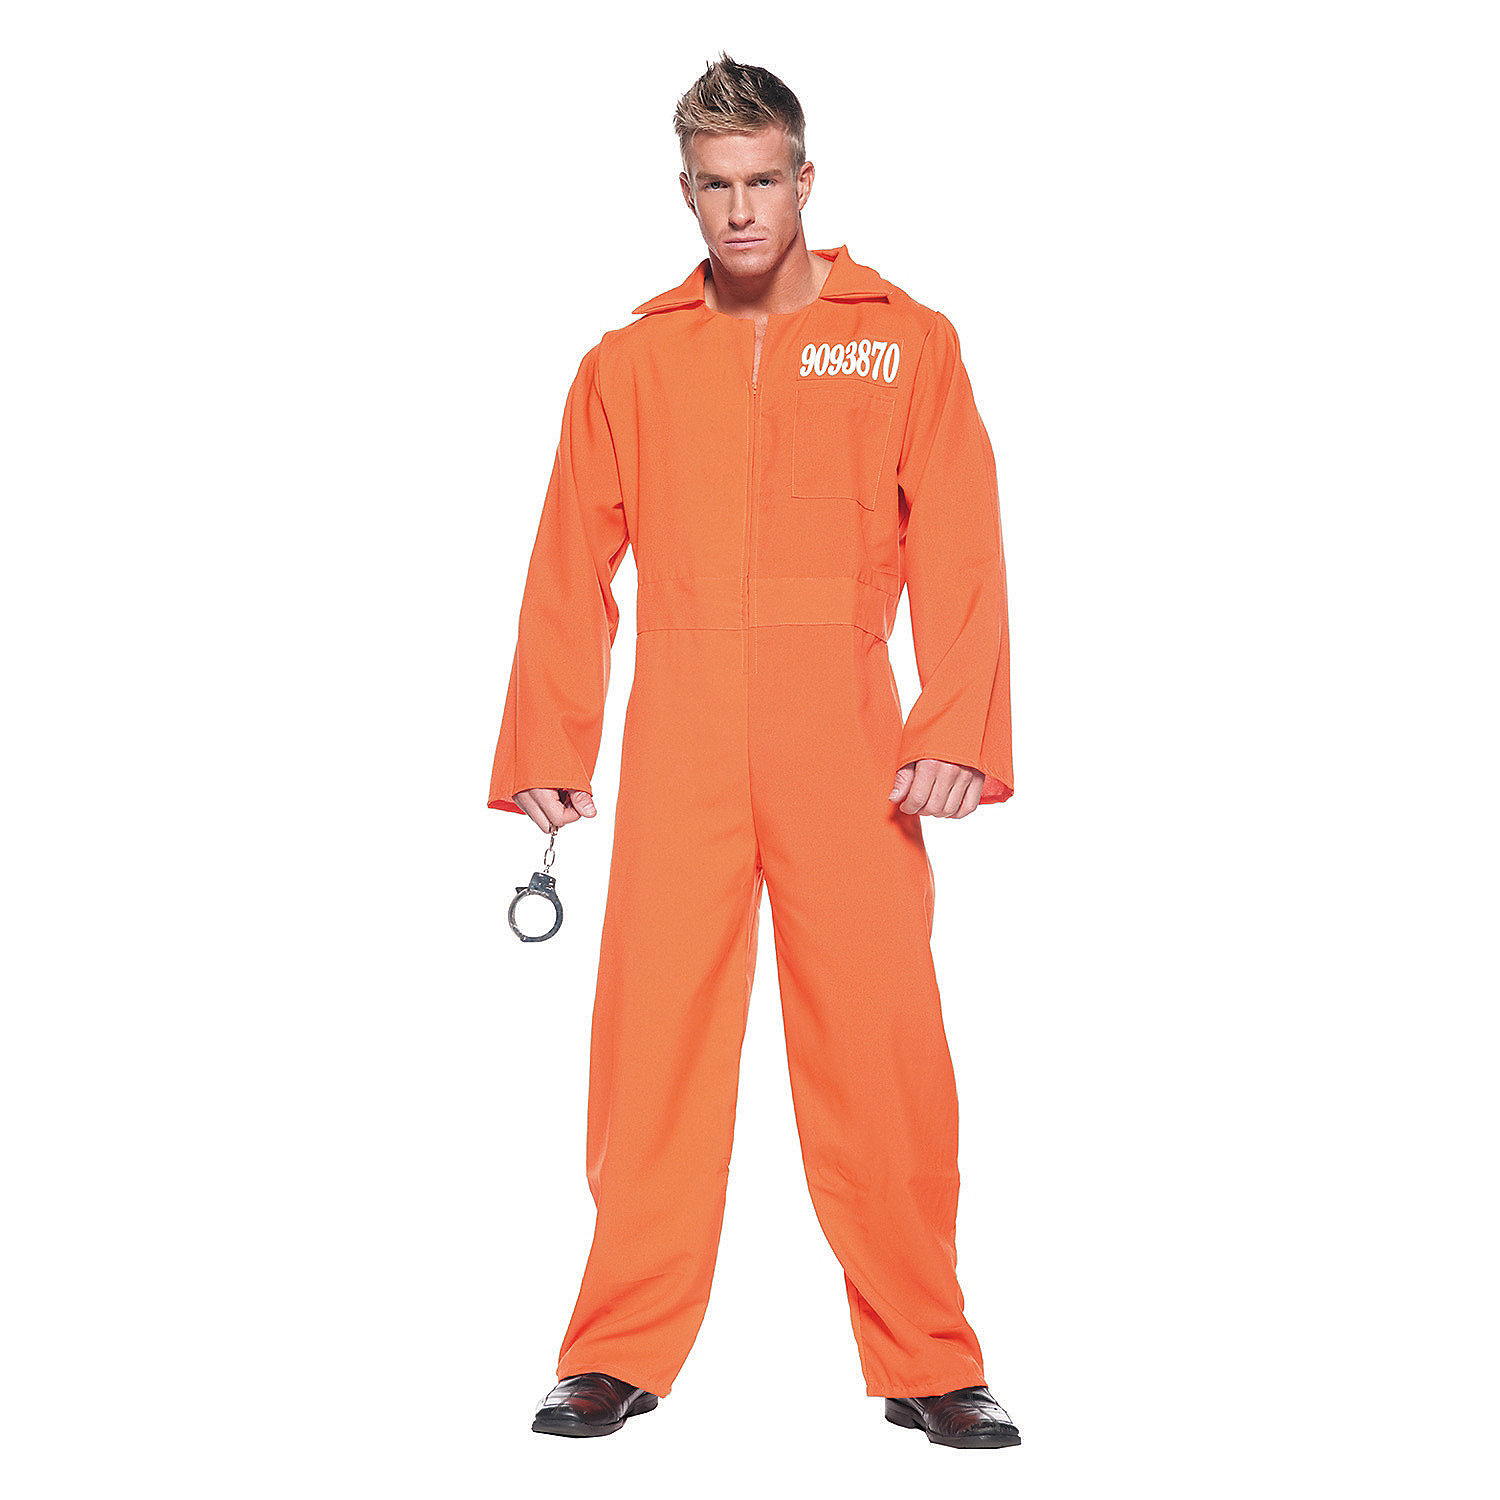 Underwraps Adult Orange Jumpsuit Costume - One Size - image 1 of 4